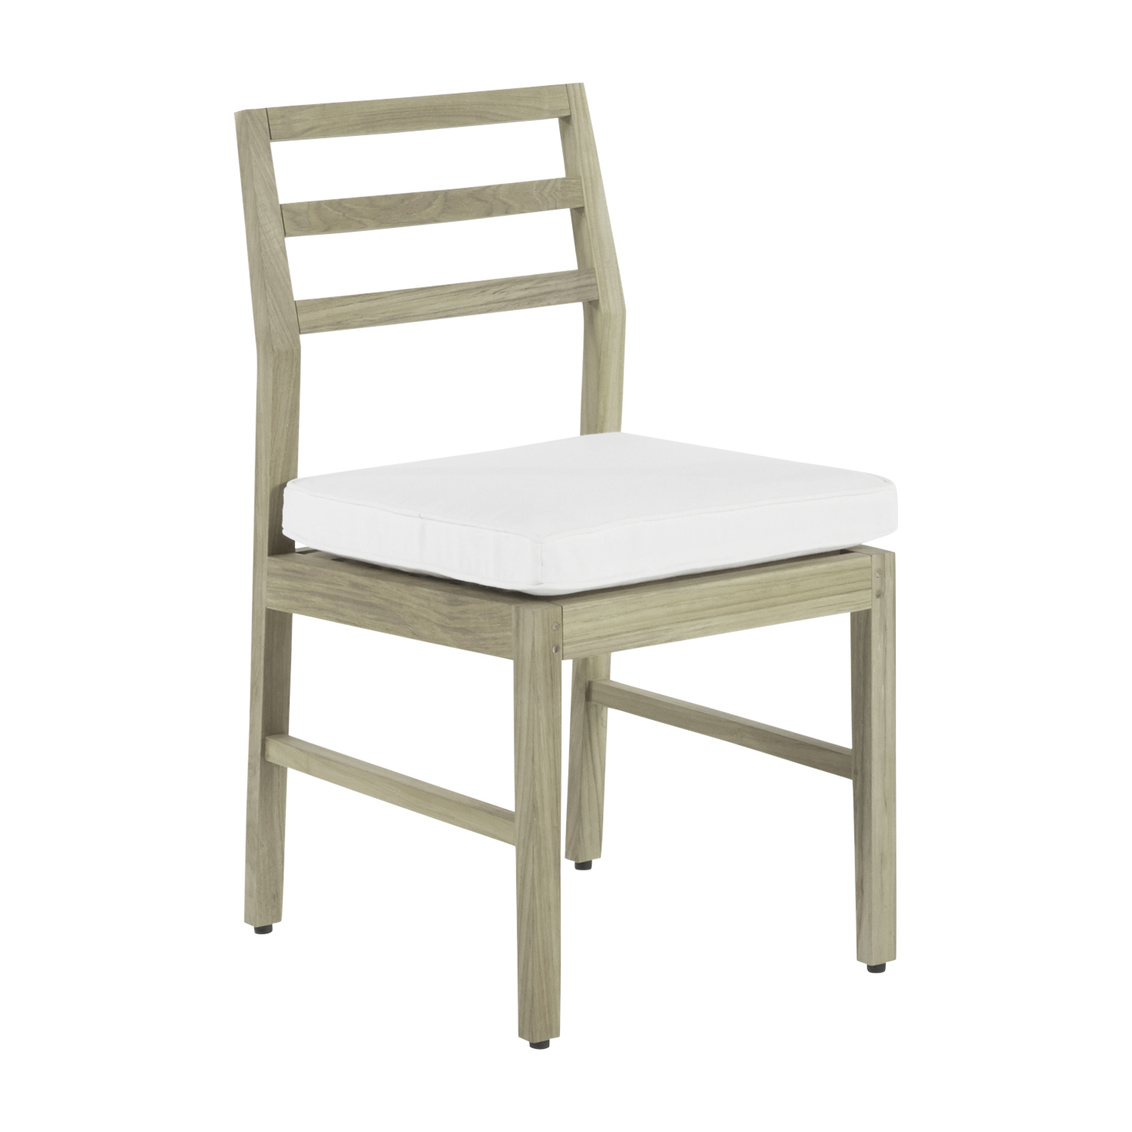 santa barbara teak side chair in oyster teak – frame only product image